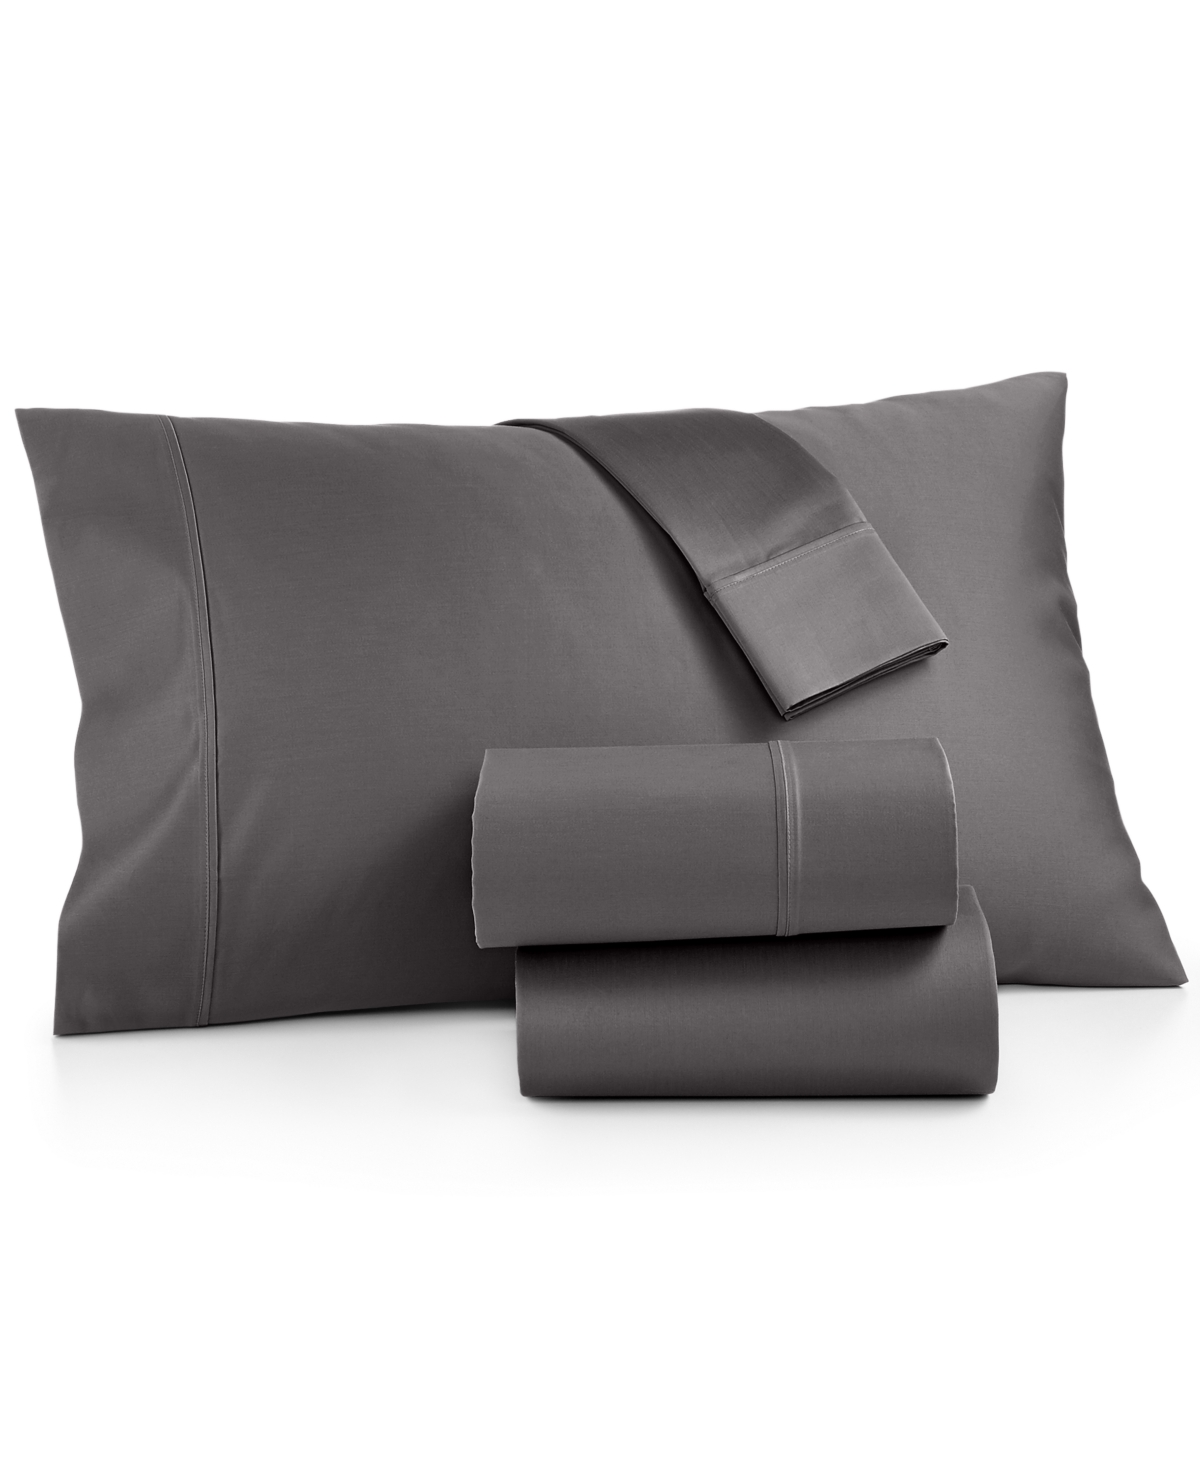 Aq Textiles Bergen House 100% Certified Egyptian Cotton 1000 Thread Count Pillowcase Pair, King Bedding In Dark Grey